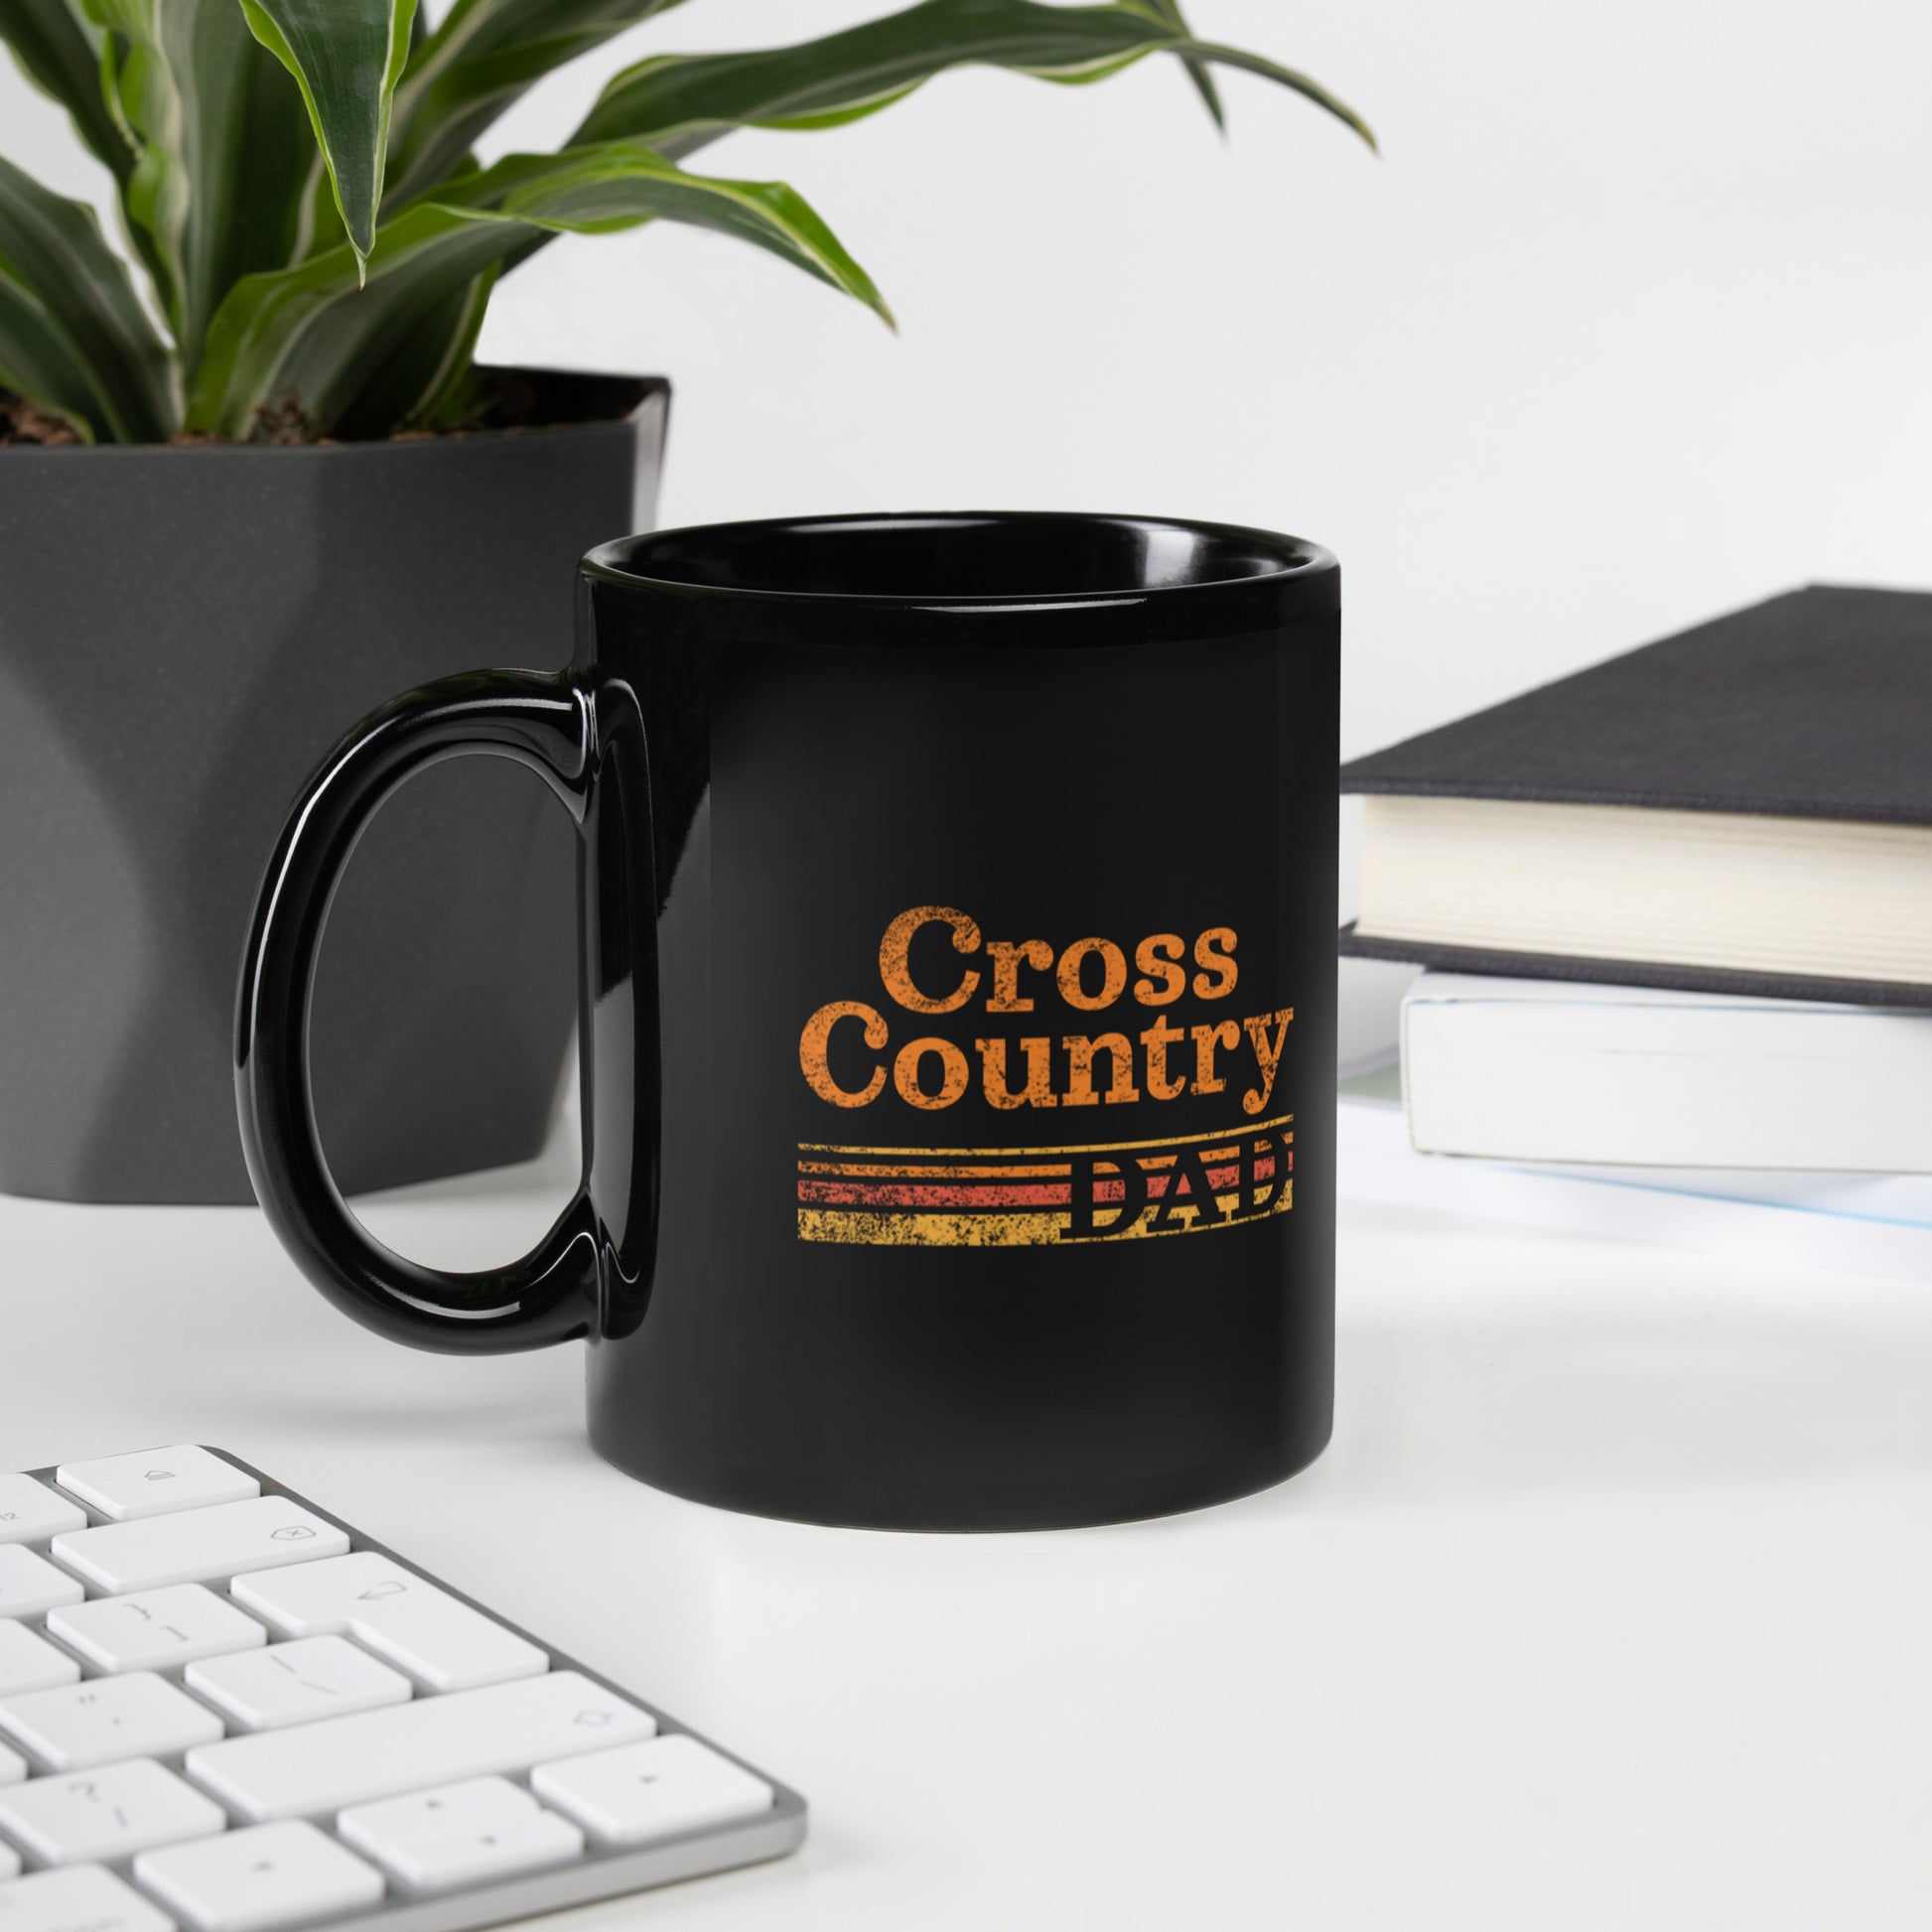 a black coffee mug sitting on top of a desk next to a keyboard